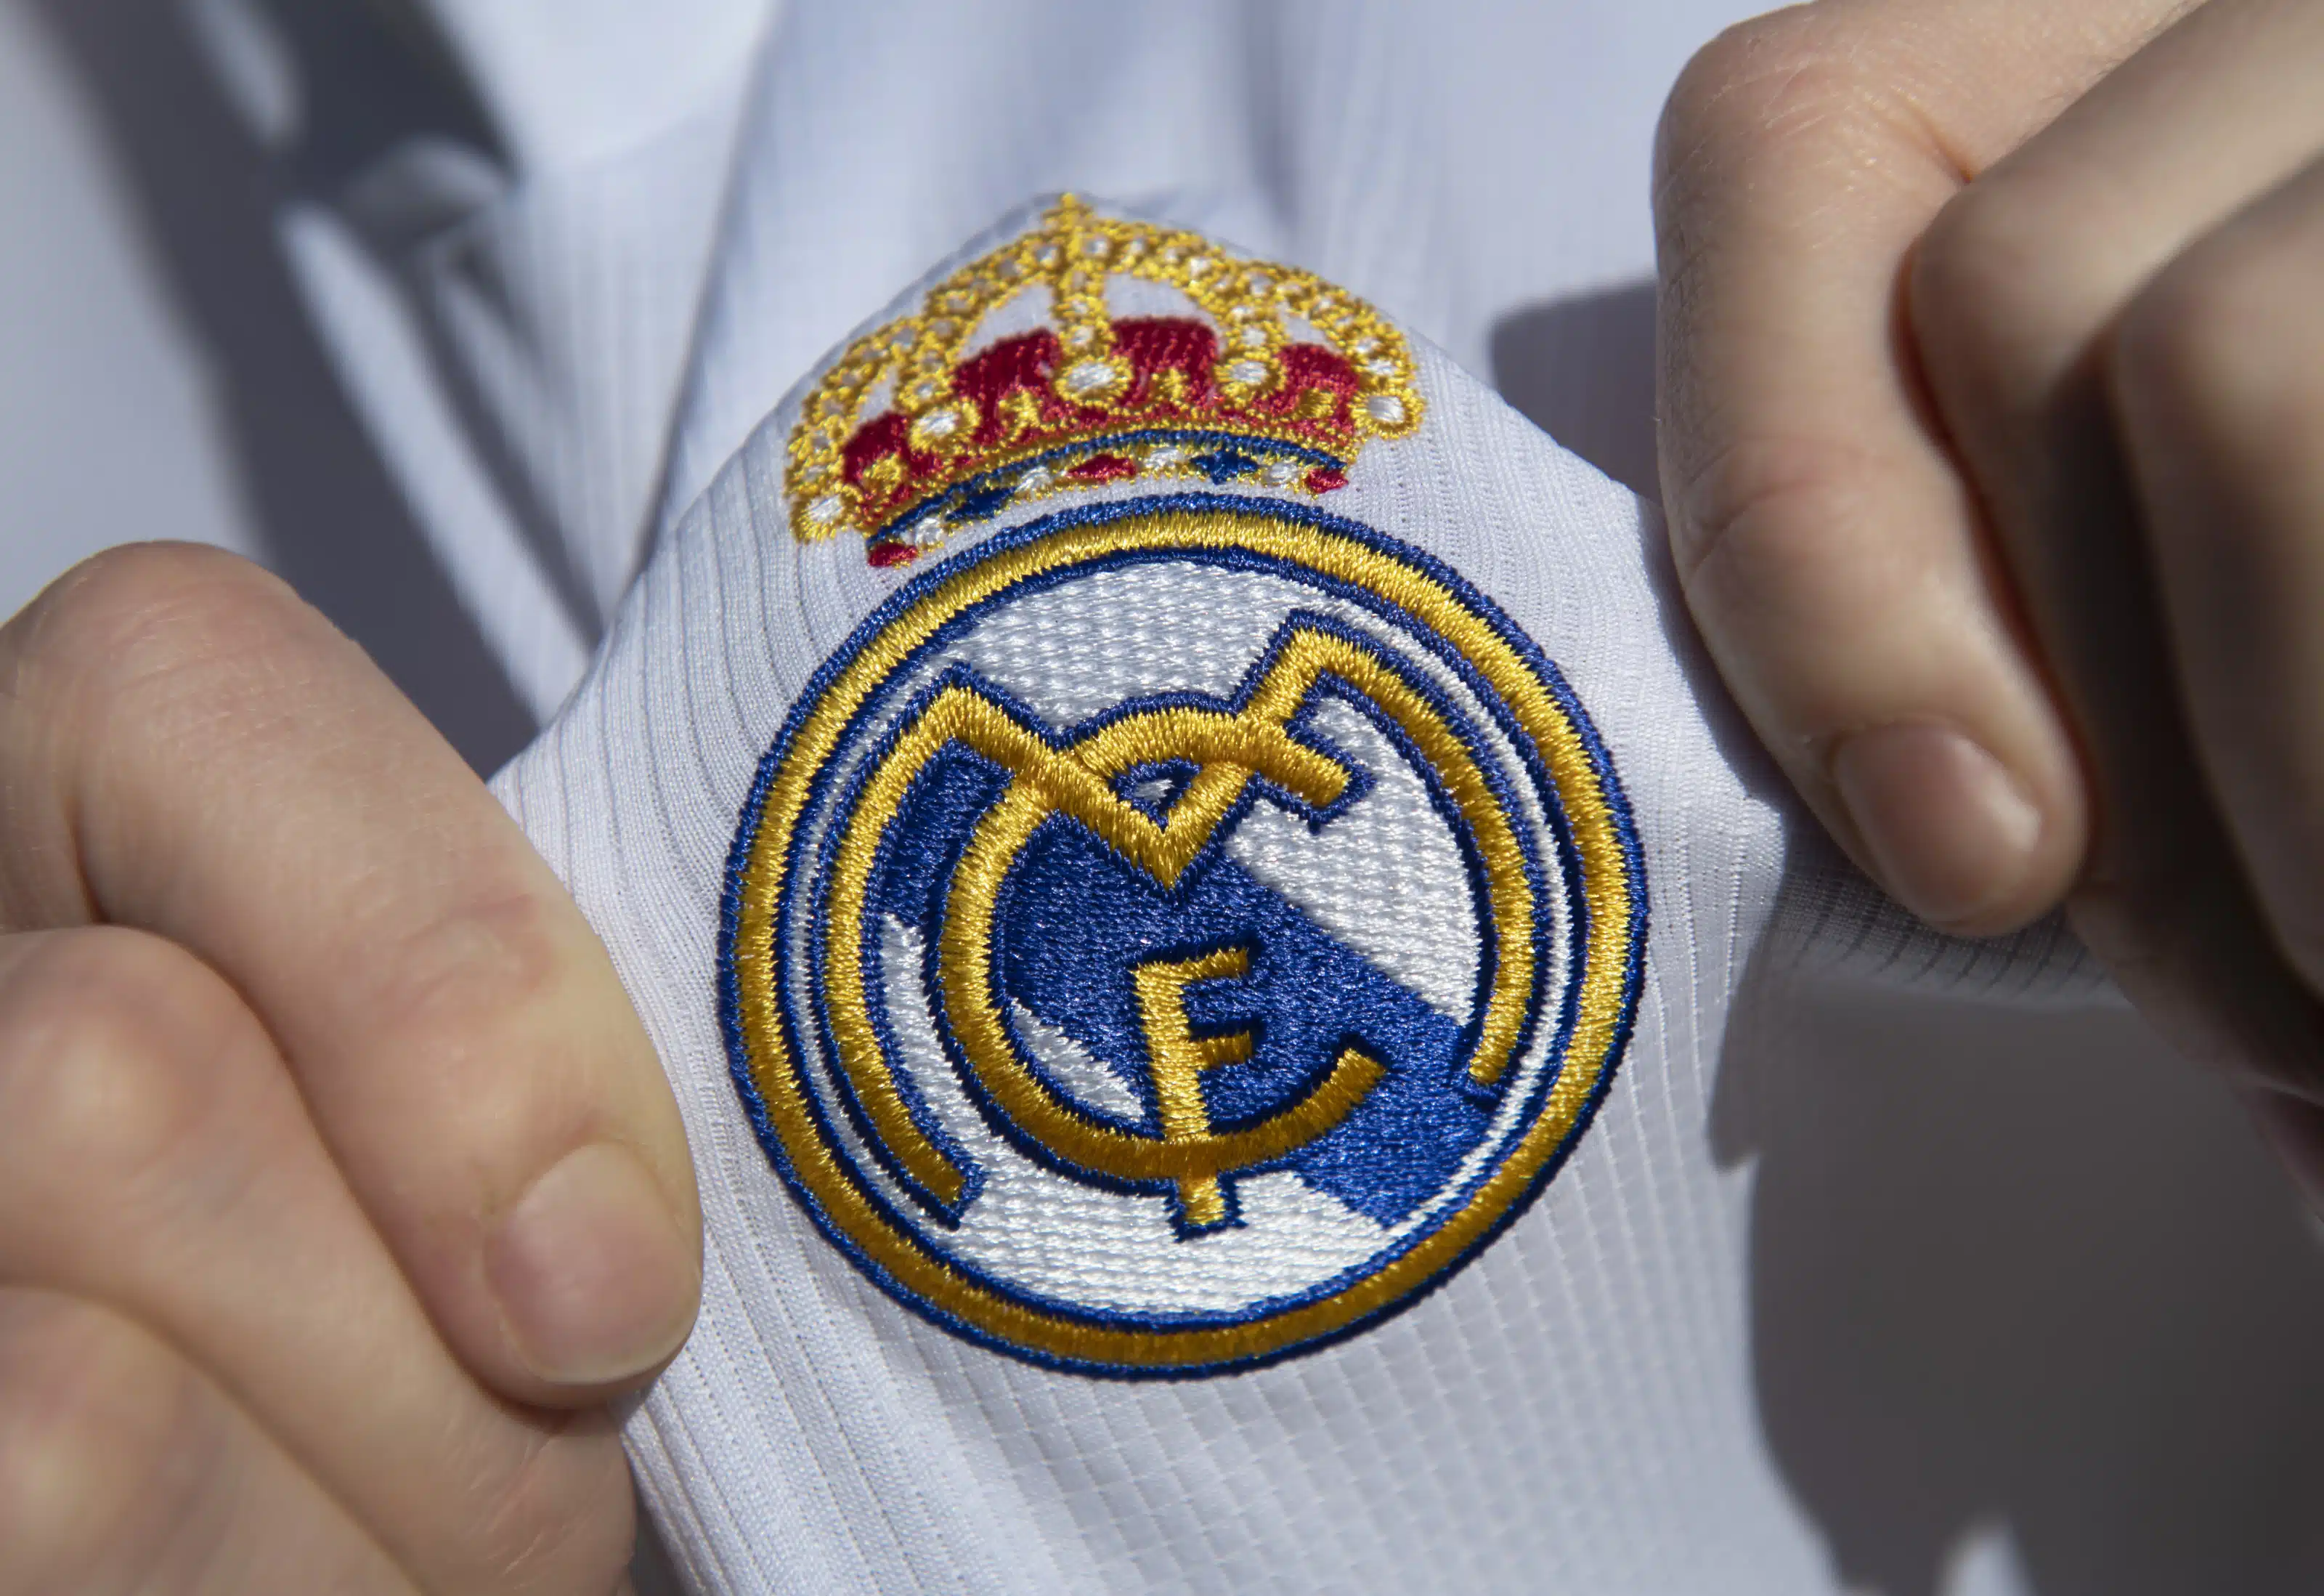 Logo Real Madrid 